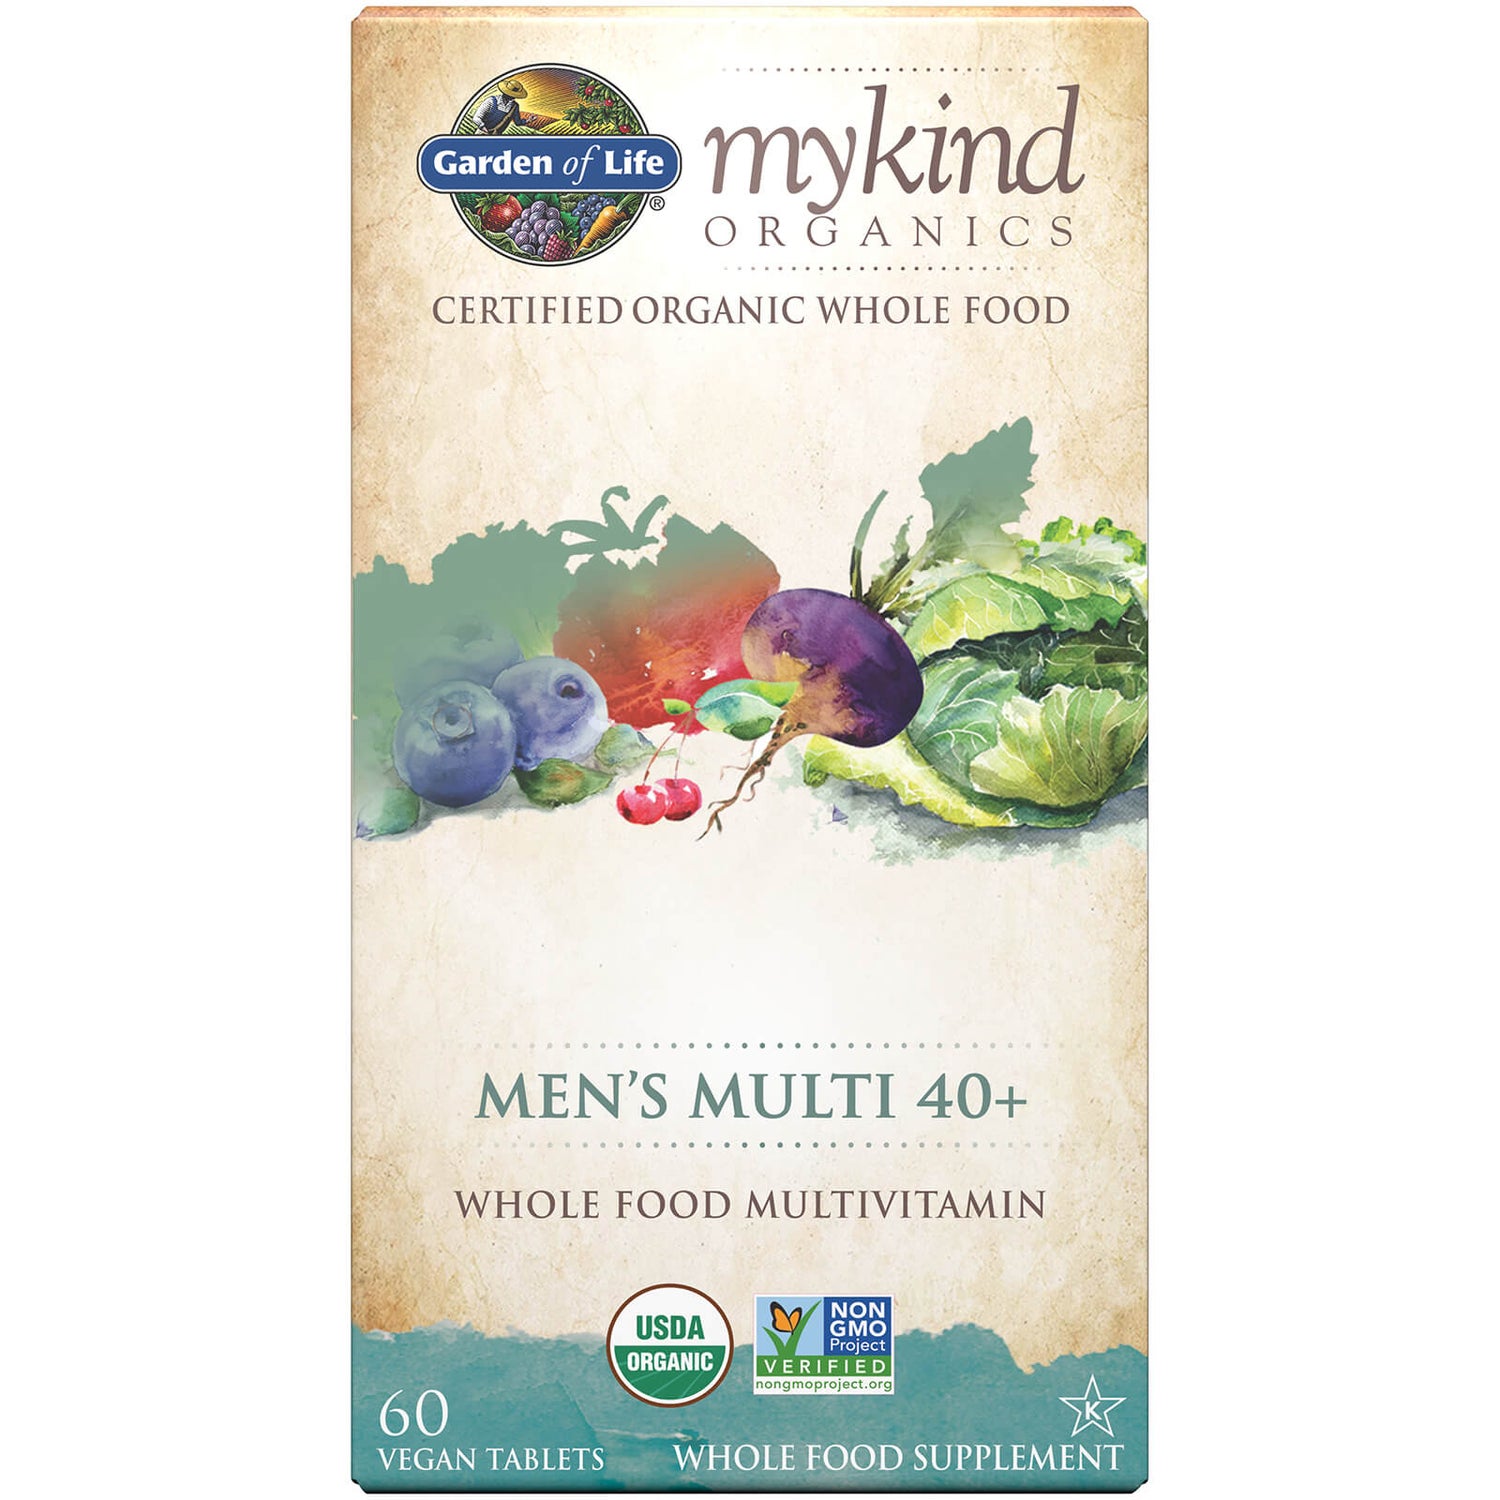 mykind Organics Мультивитаминный комплекс для мужчин 40+ - 60 таблеток